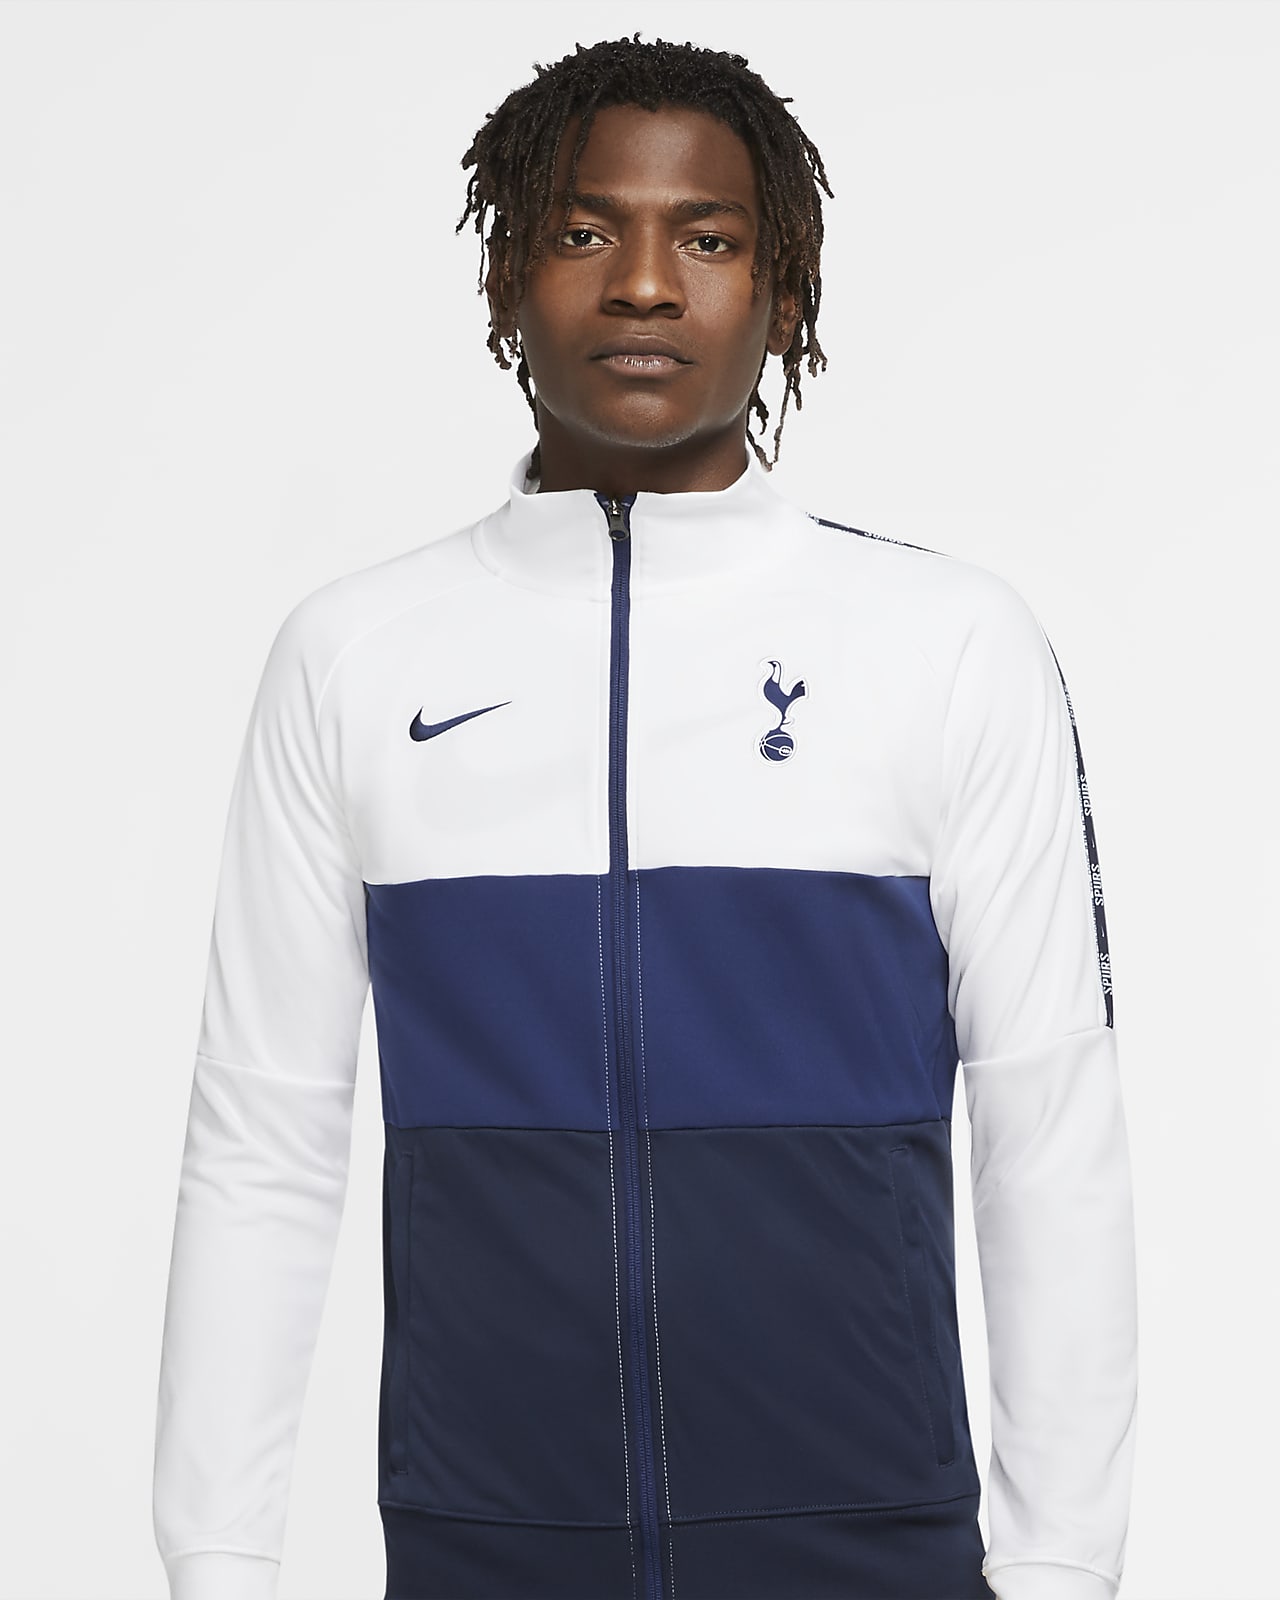 Tottenham Hotspur Men's Tracksuit Jacket. Nike LU